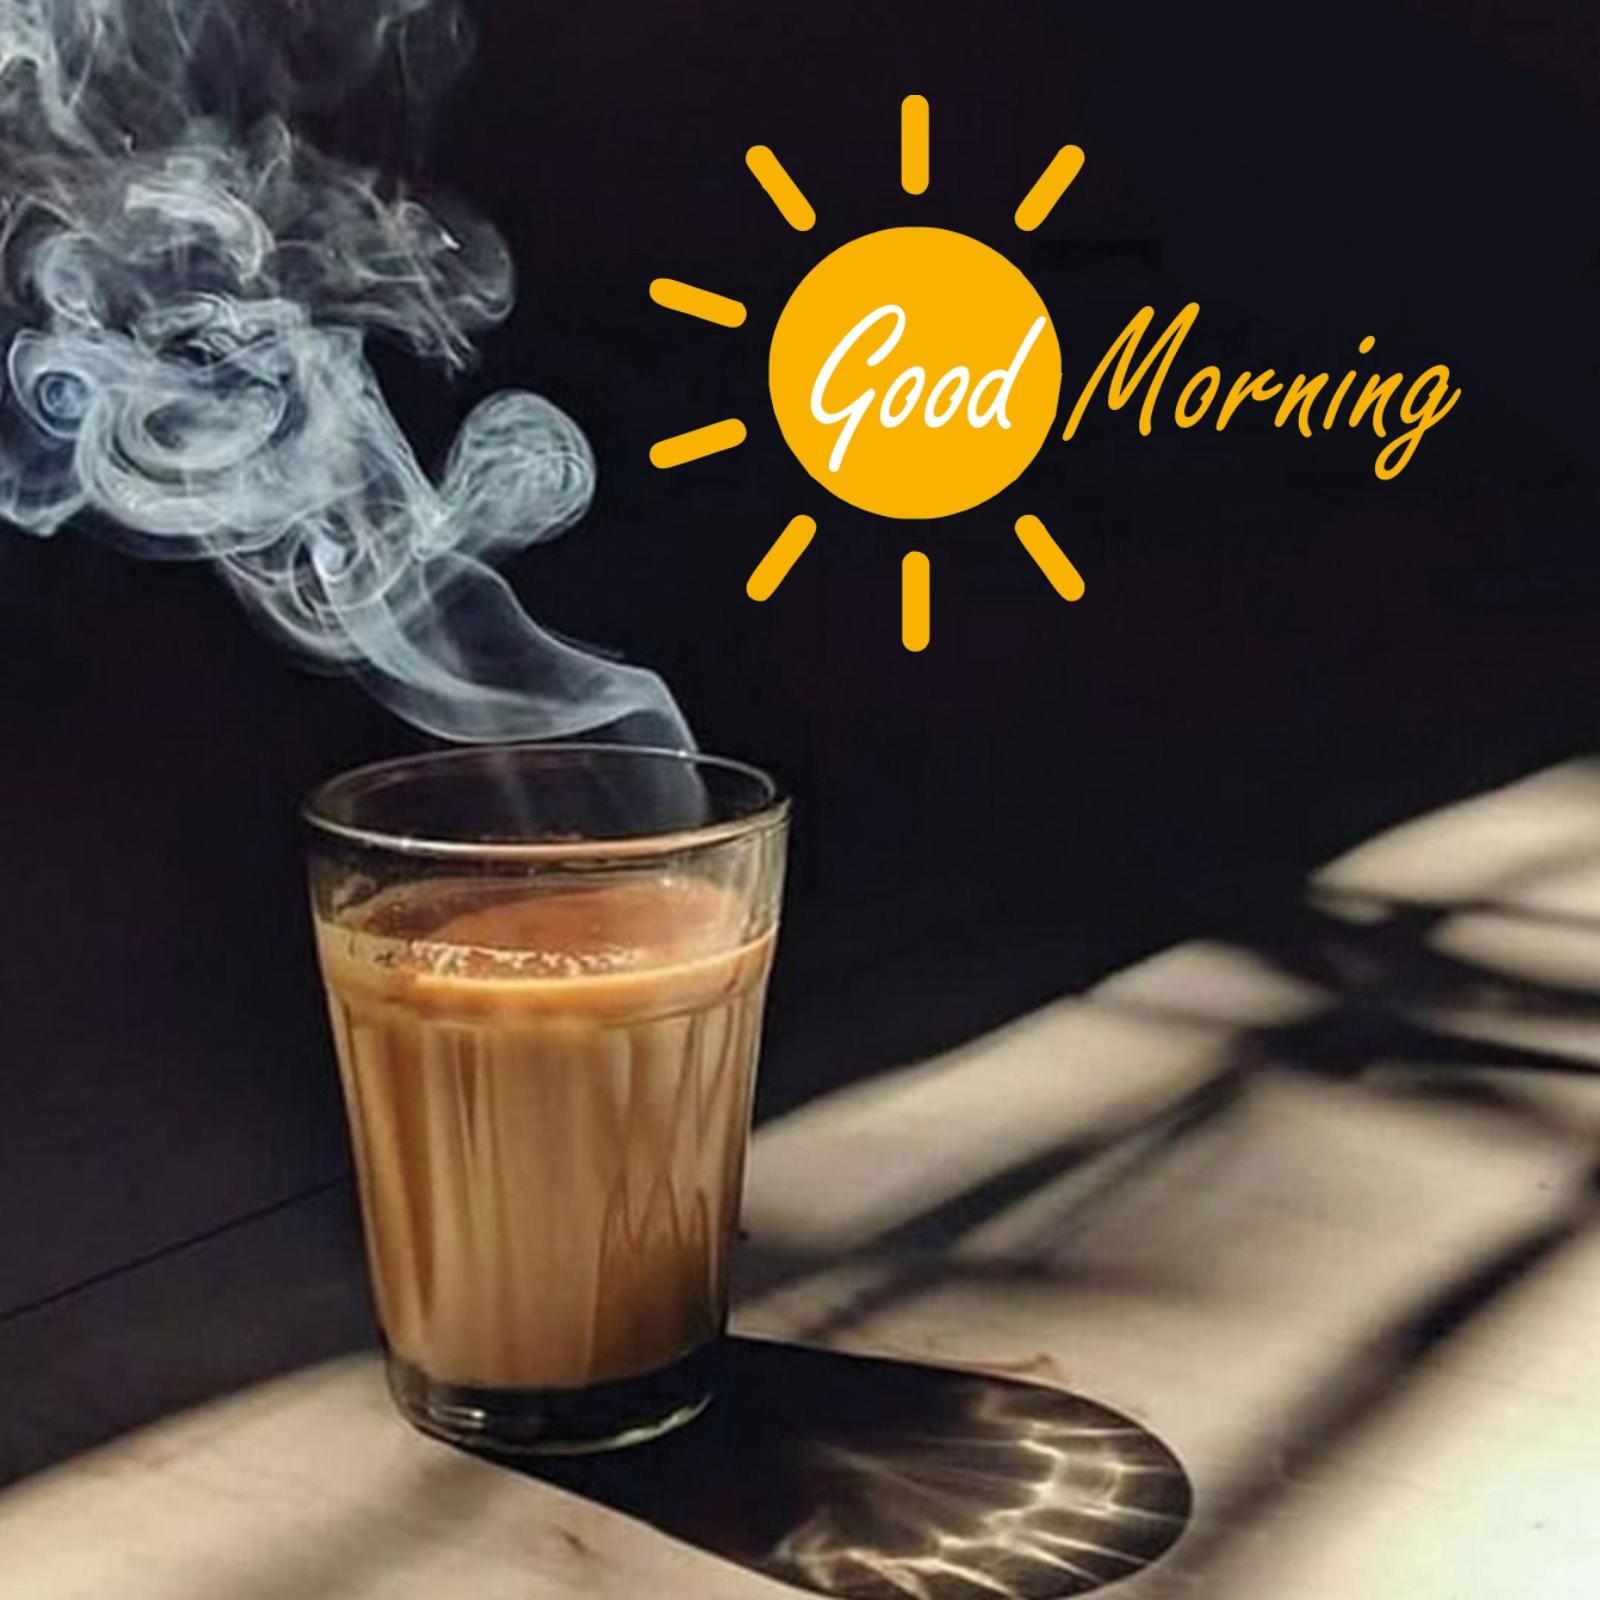 Good Morning Hot Tea Images